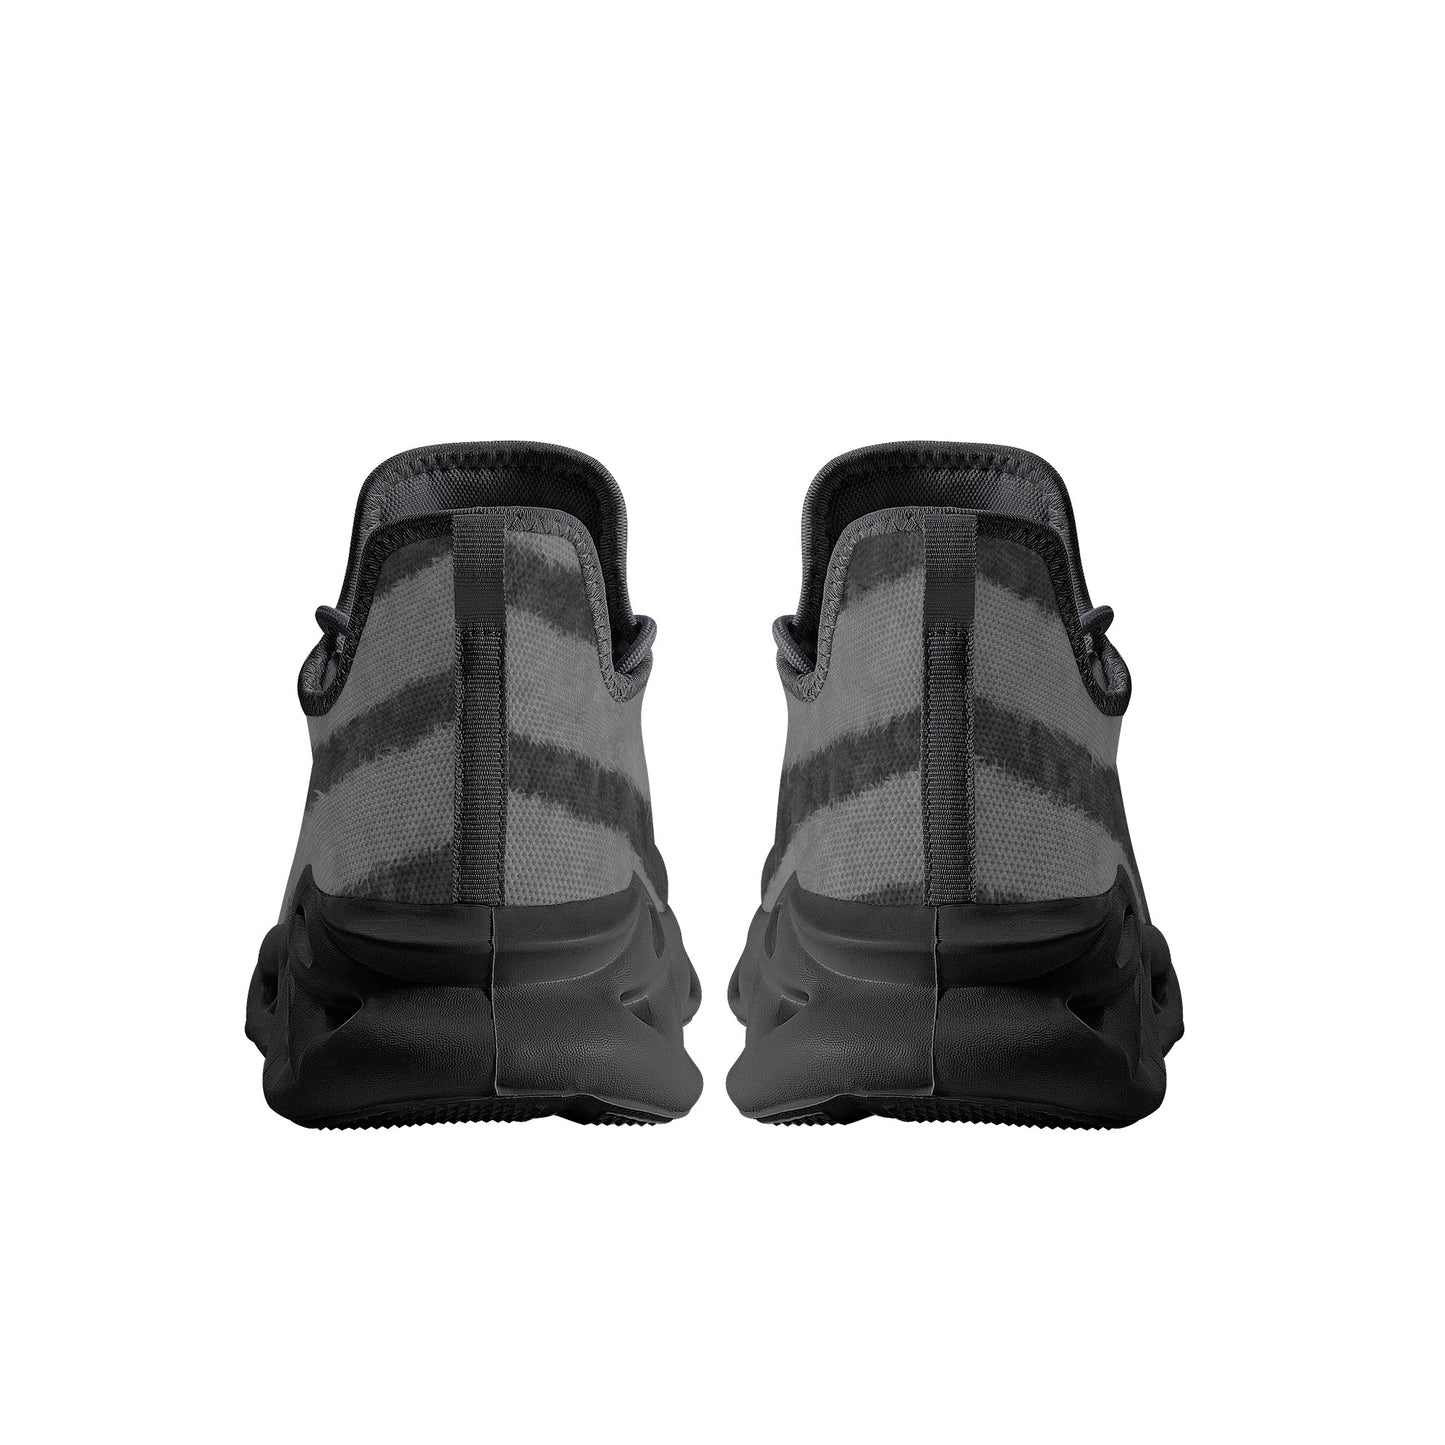 "Mono Plume" Flex Control Sneaker